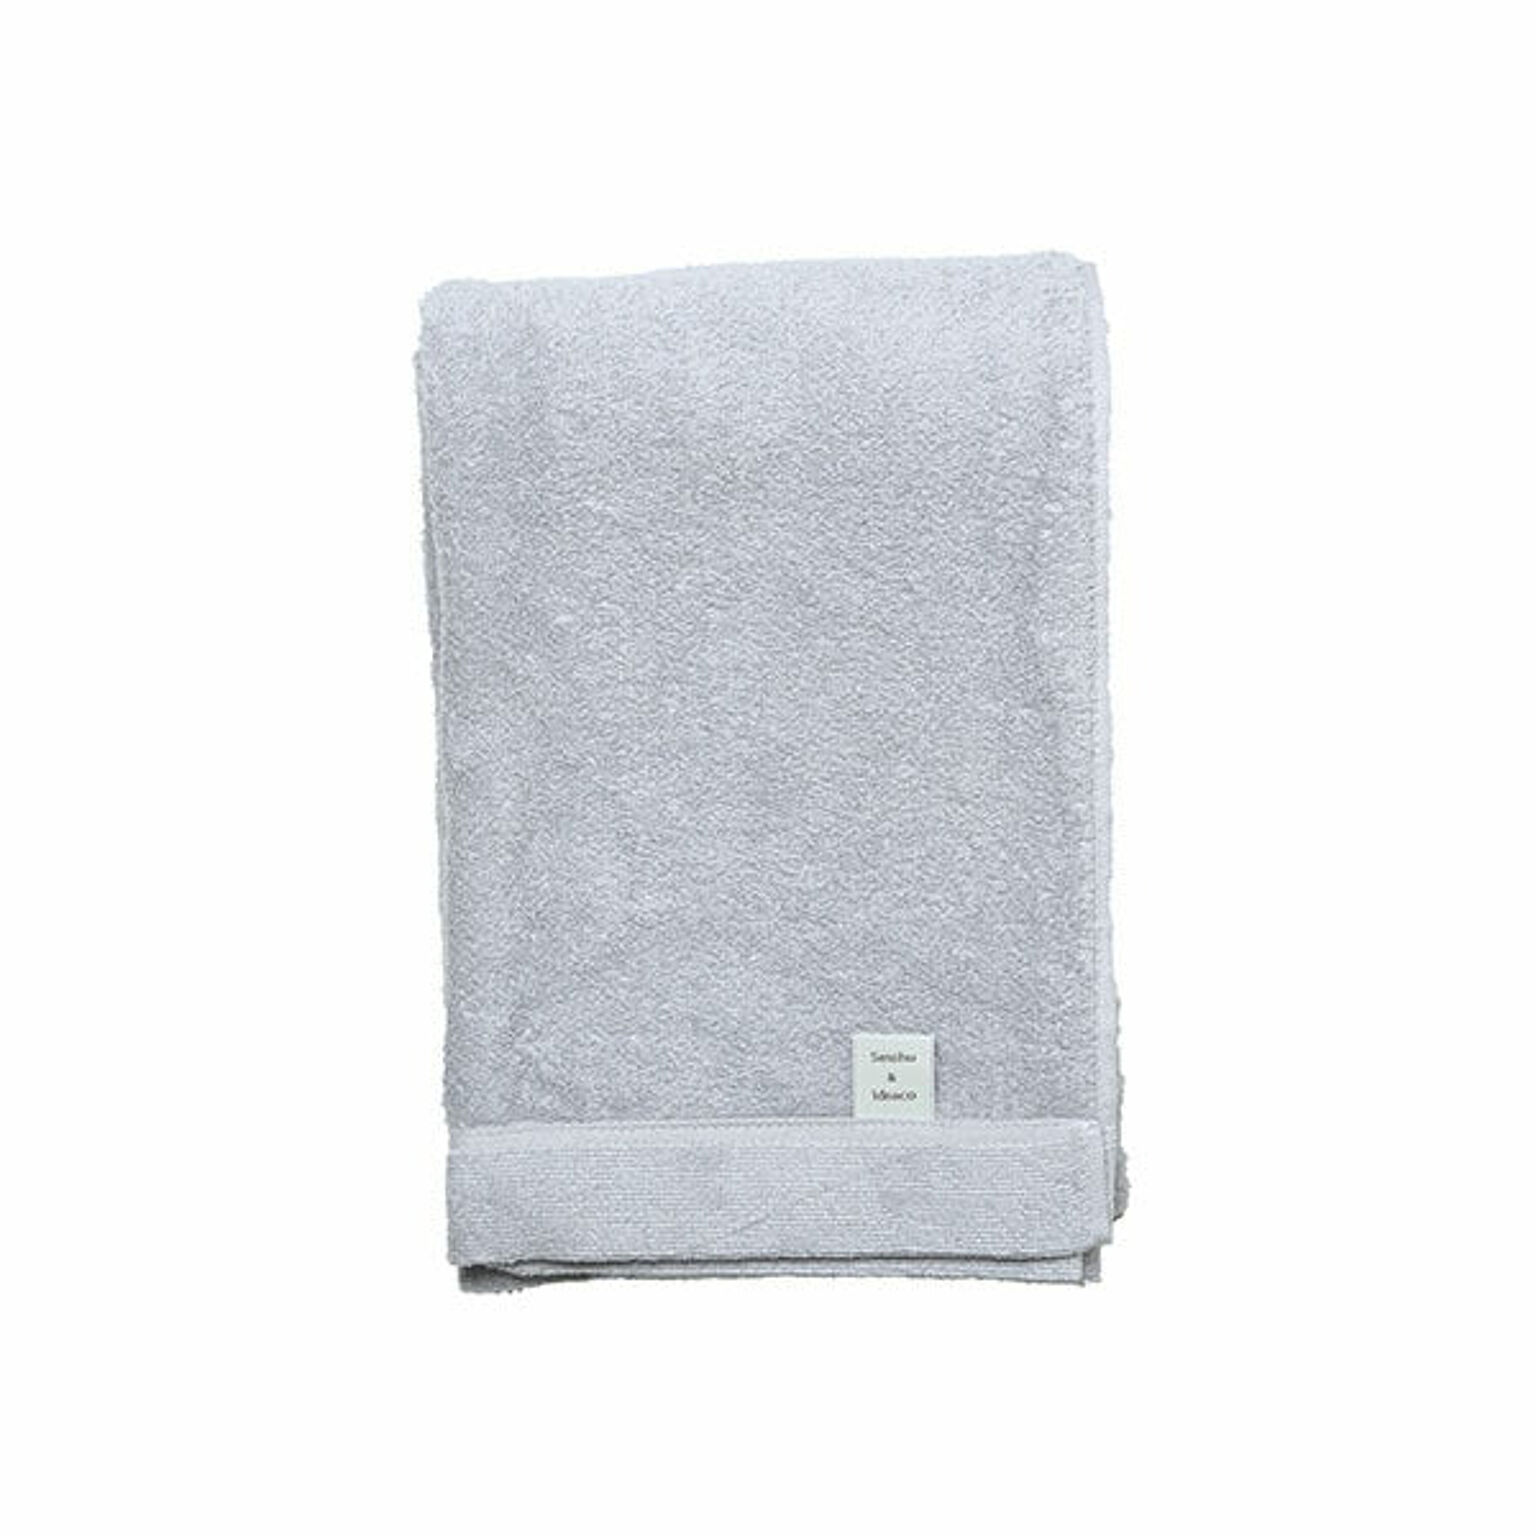 organic cotton towel / smart bath イデアコ オーガニック コットン タオル / スマートバス 泉州タオル